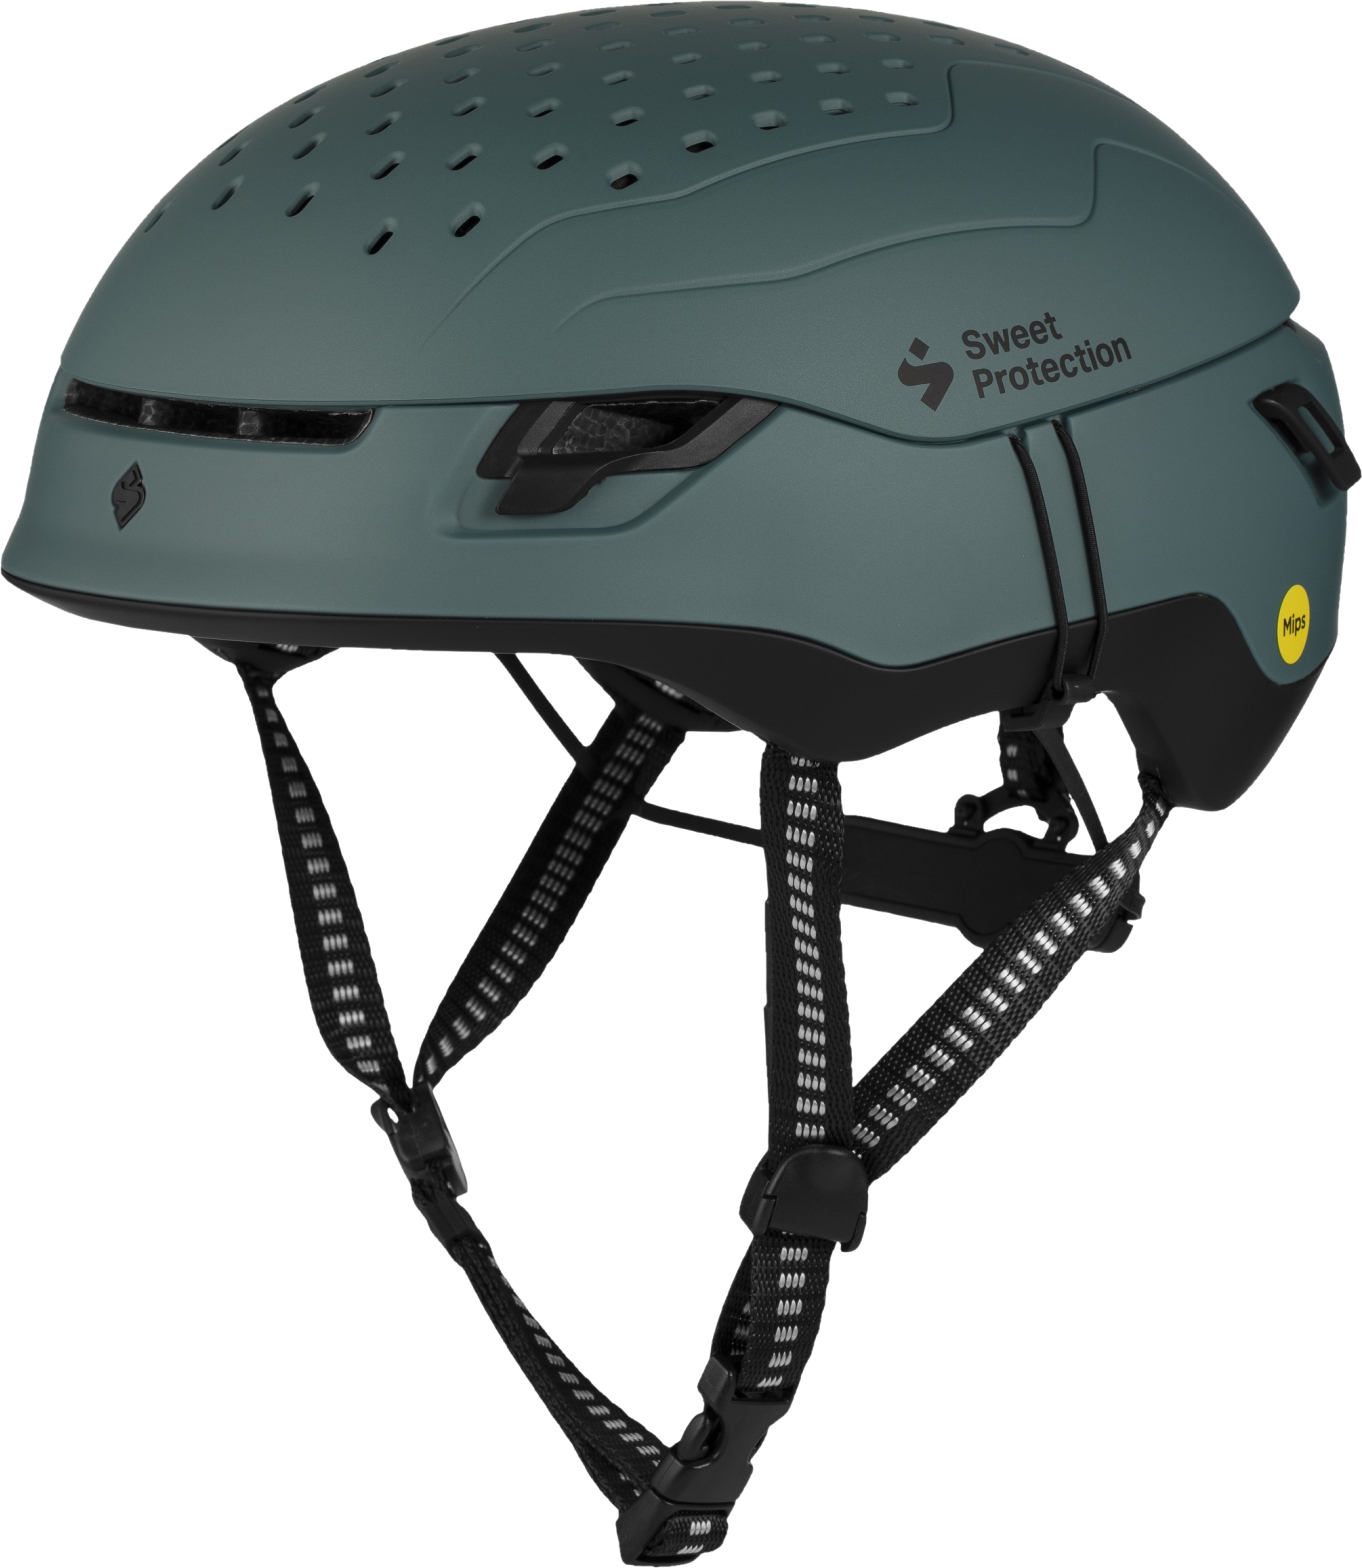 E-shop Sweet Protection Ascender MIPS Helmet - Matte Sea Metallic 56-59